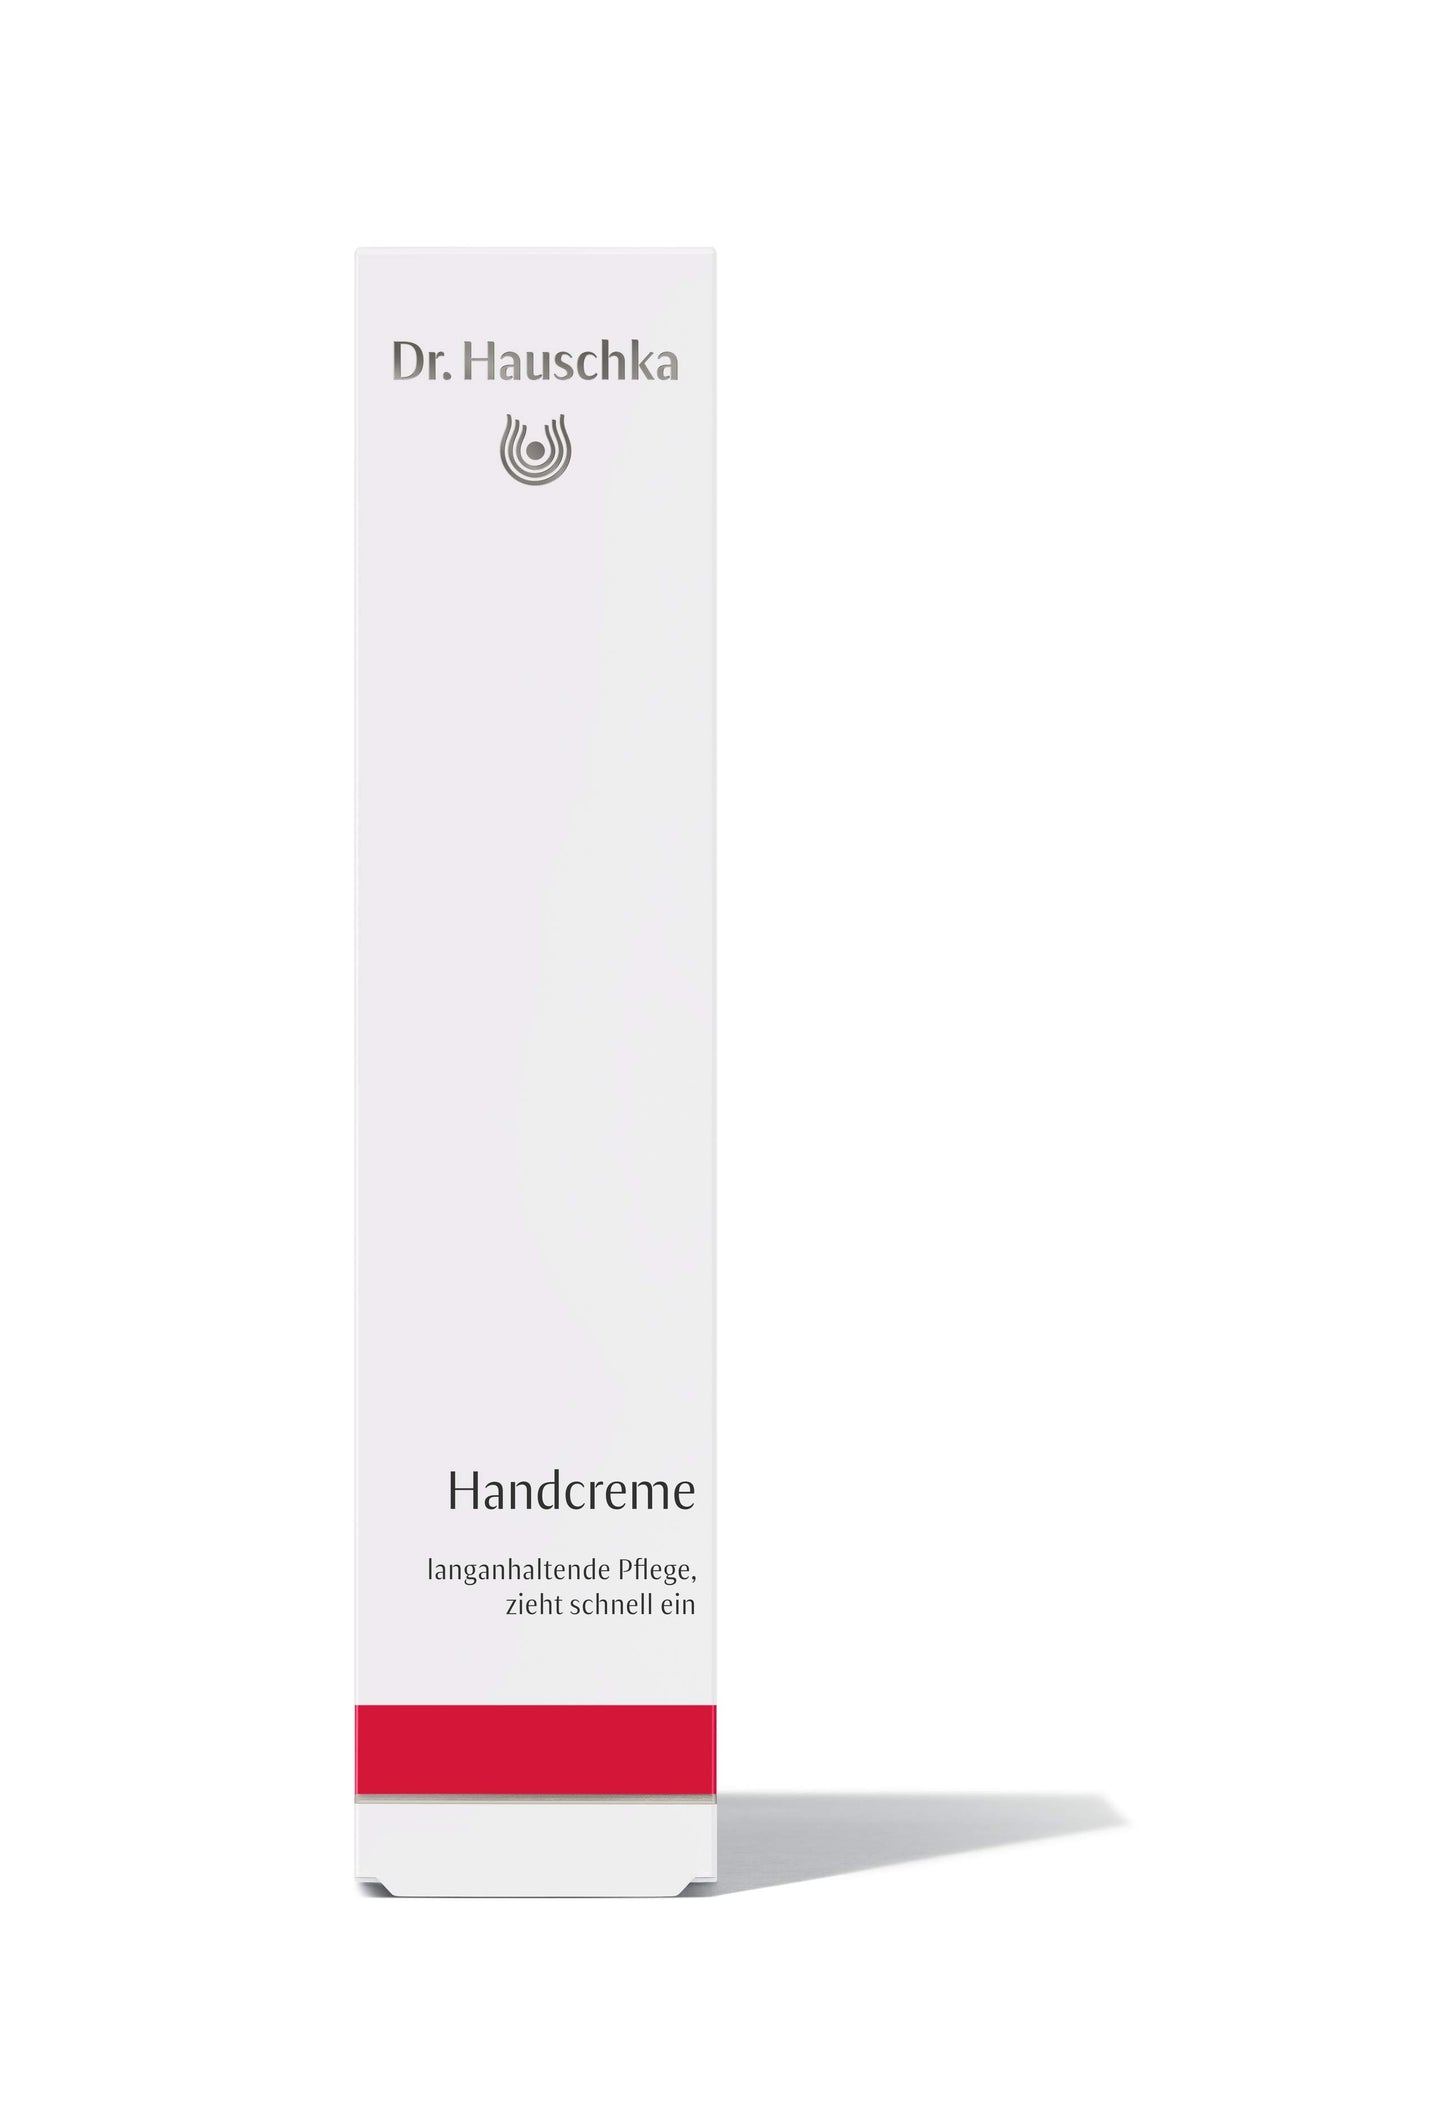 Dr. Hauschka - Handcreme - 50 ml